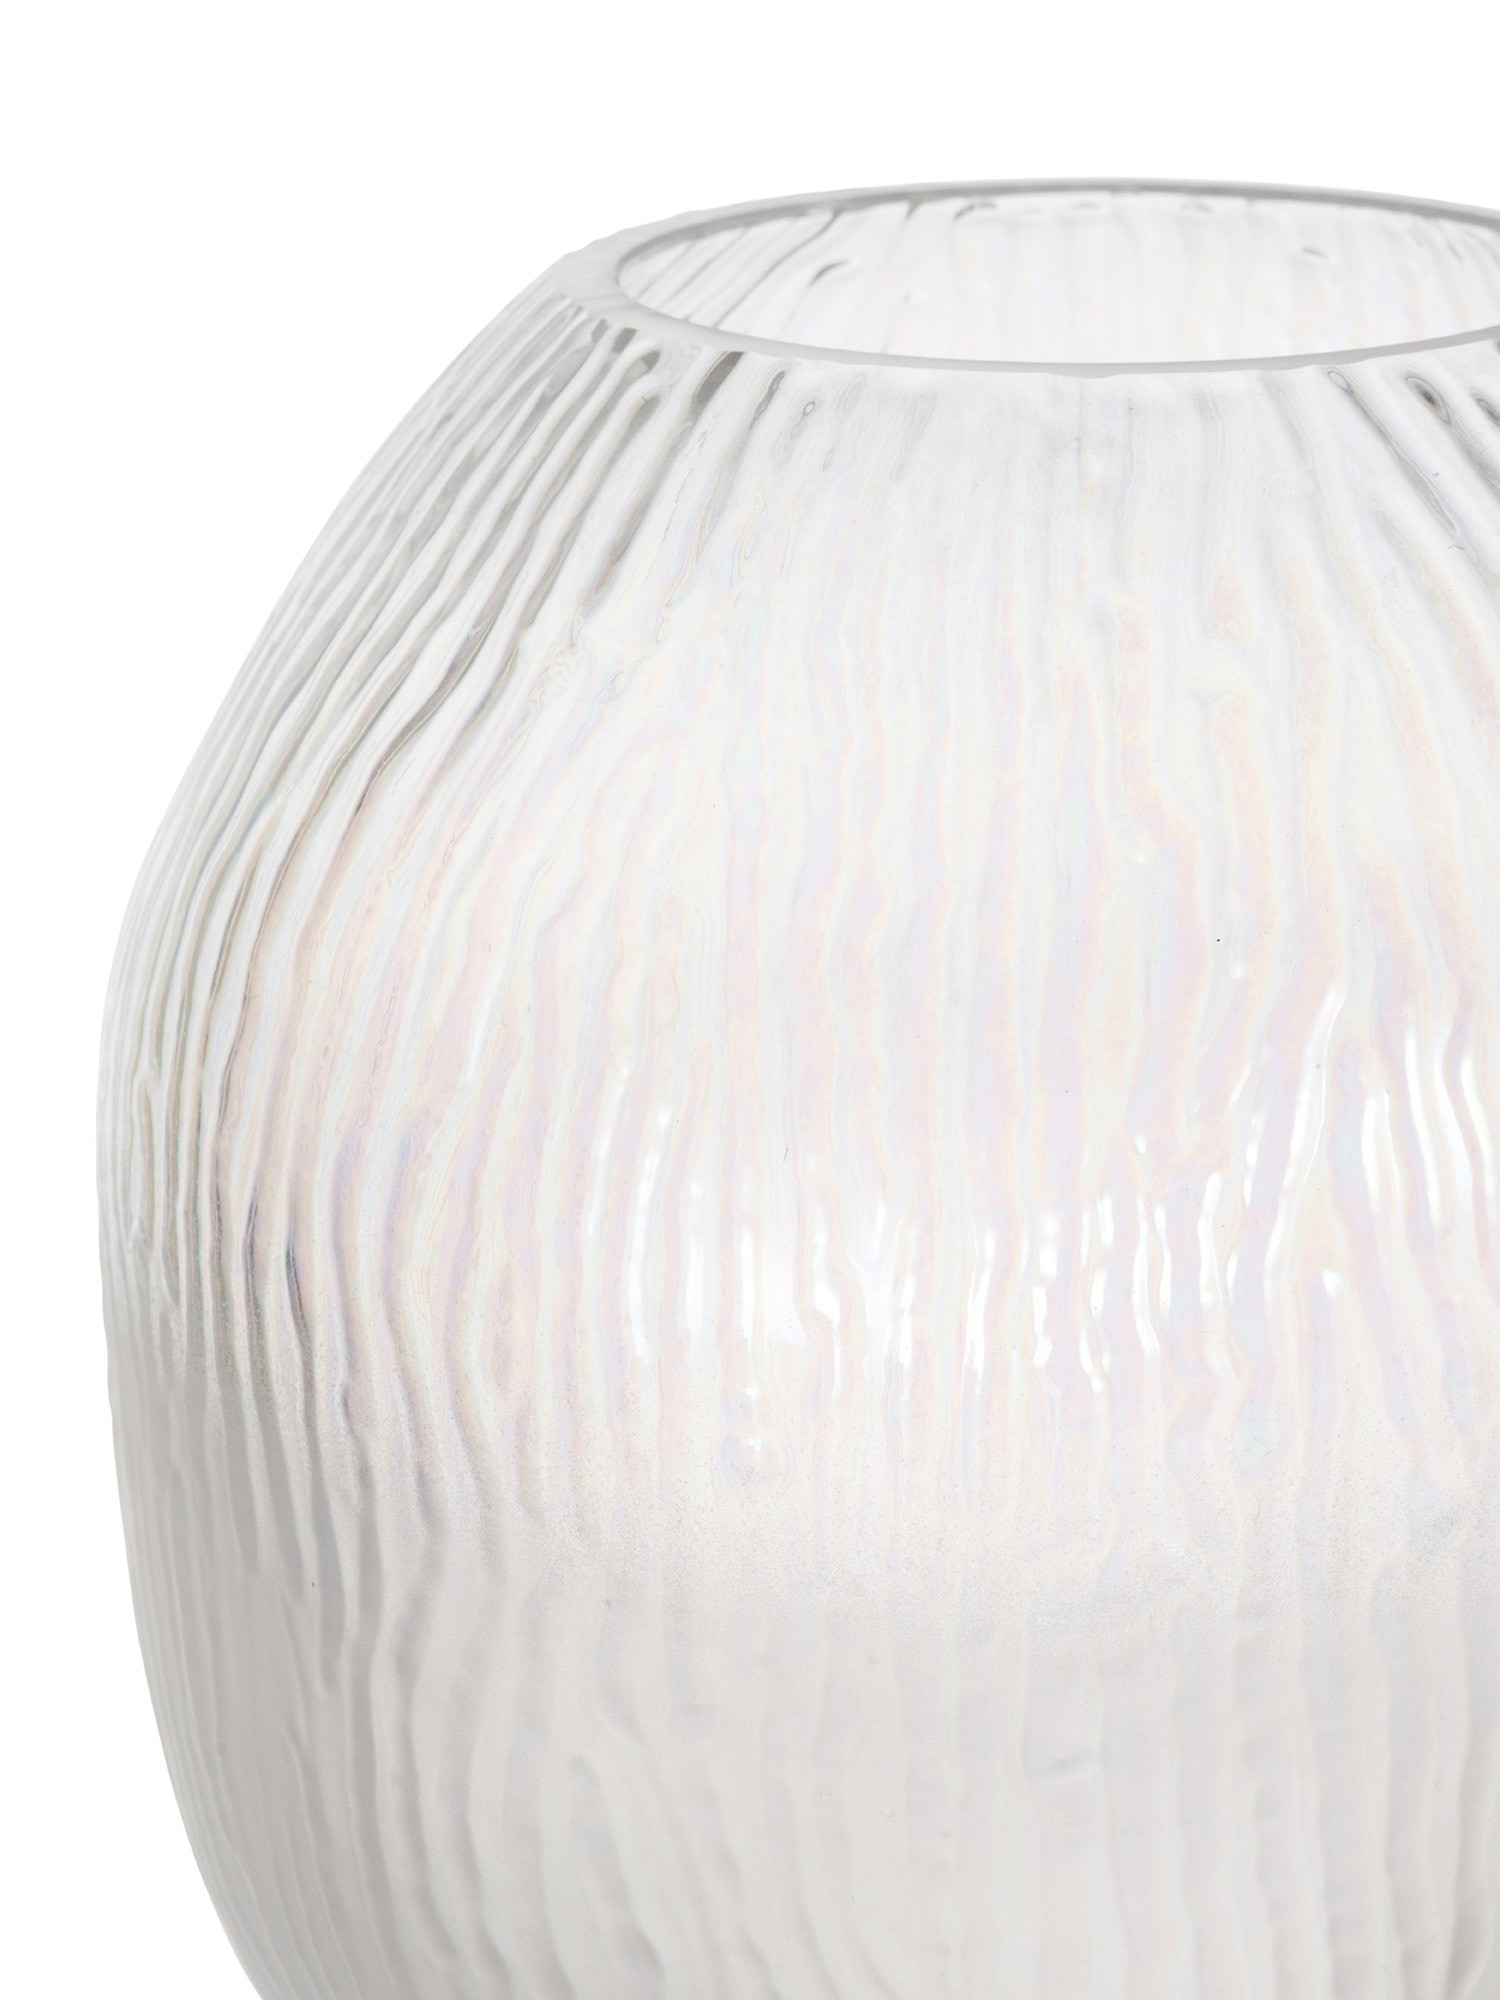 Opalescent glass vase, White, large image number 1